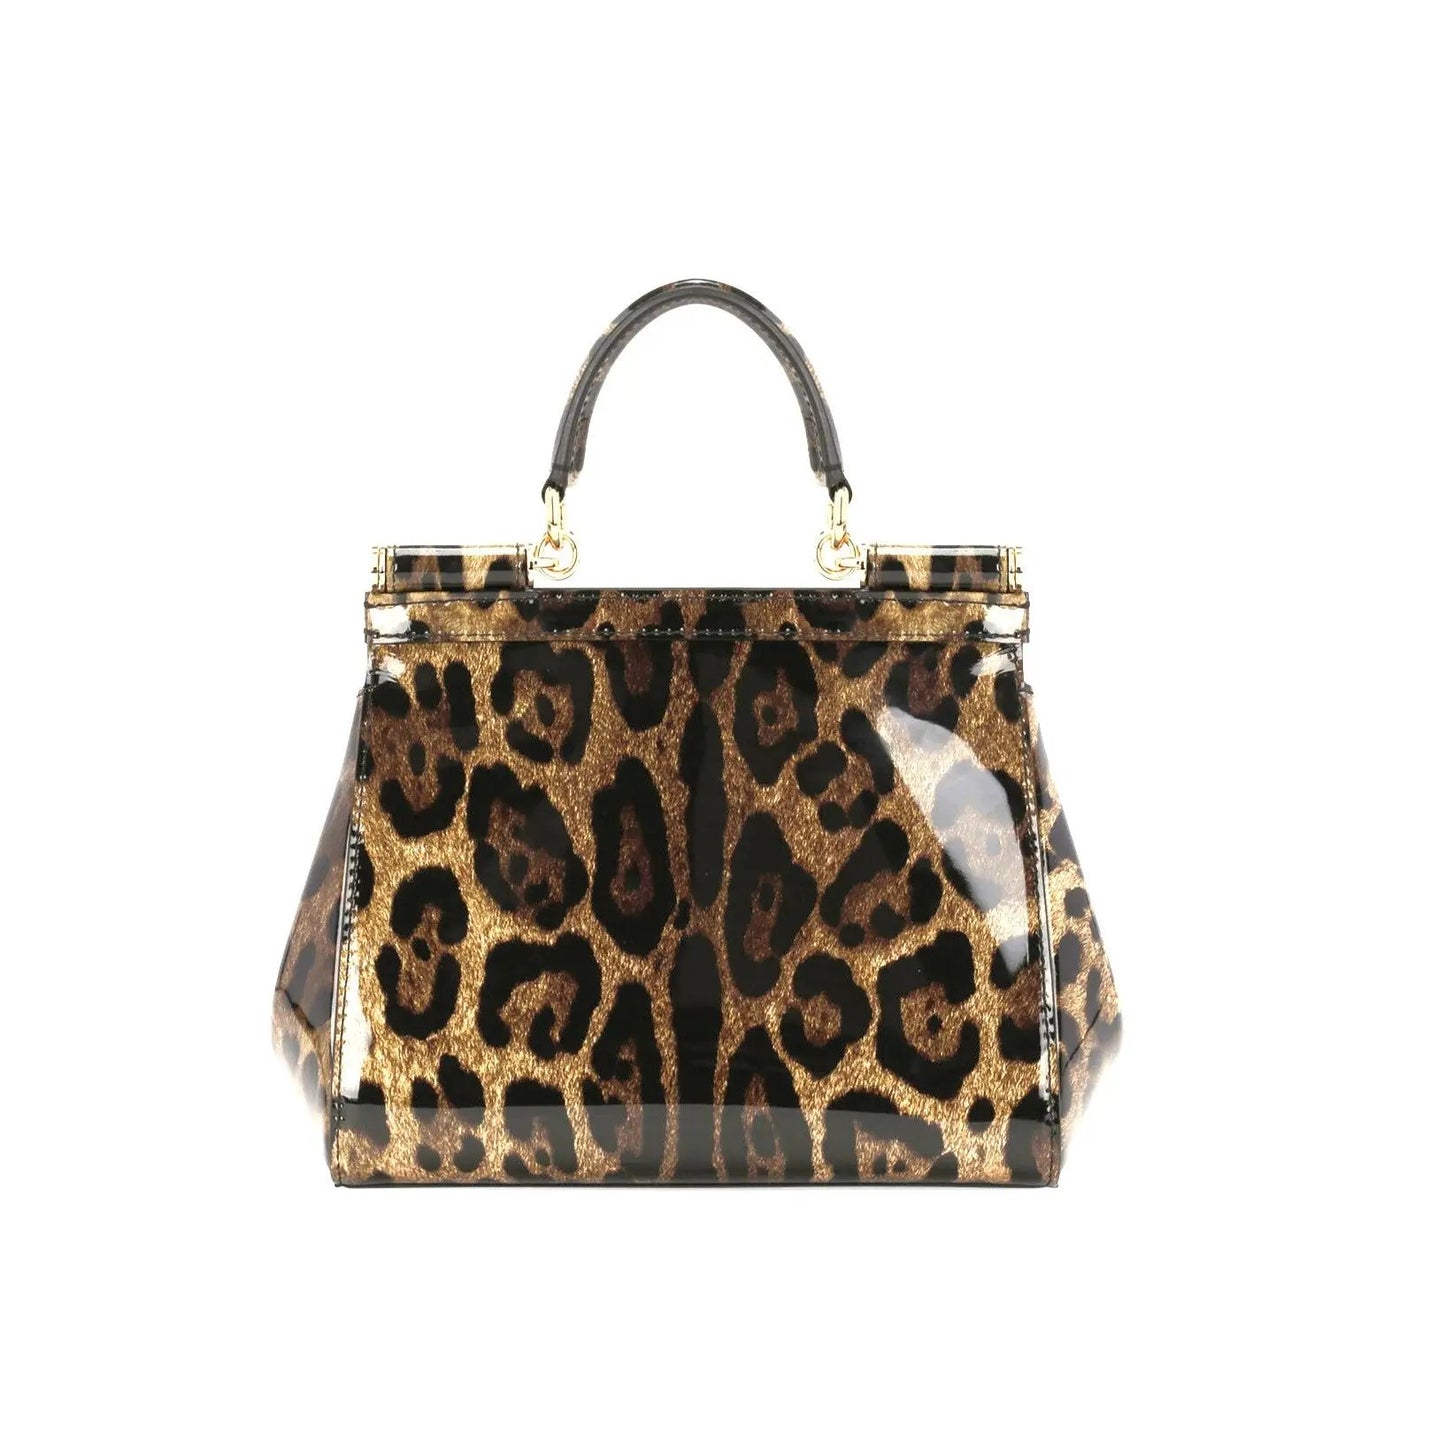 KIM D&G Sicily Medium Handbag in Animal Print Handbags DOLCE & GABBANA - LOLAMIR